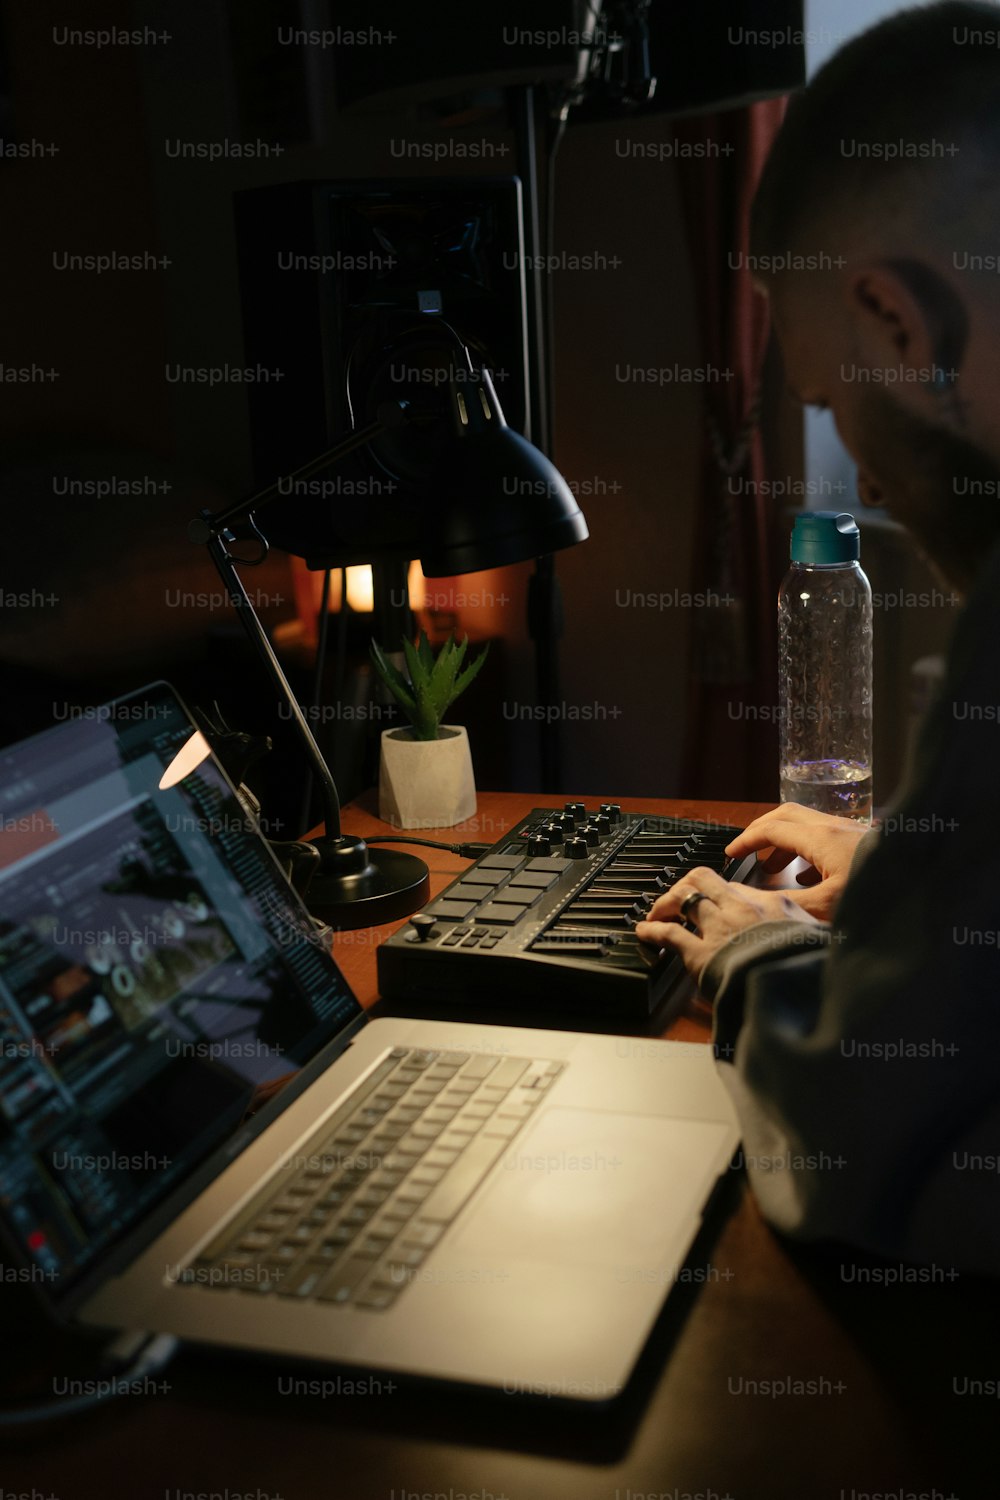 Un hombre sentado frente a una computadora portátil